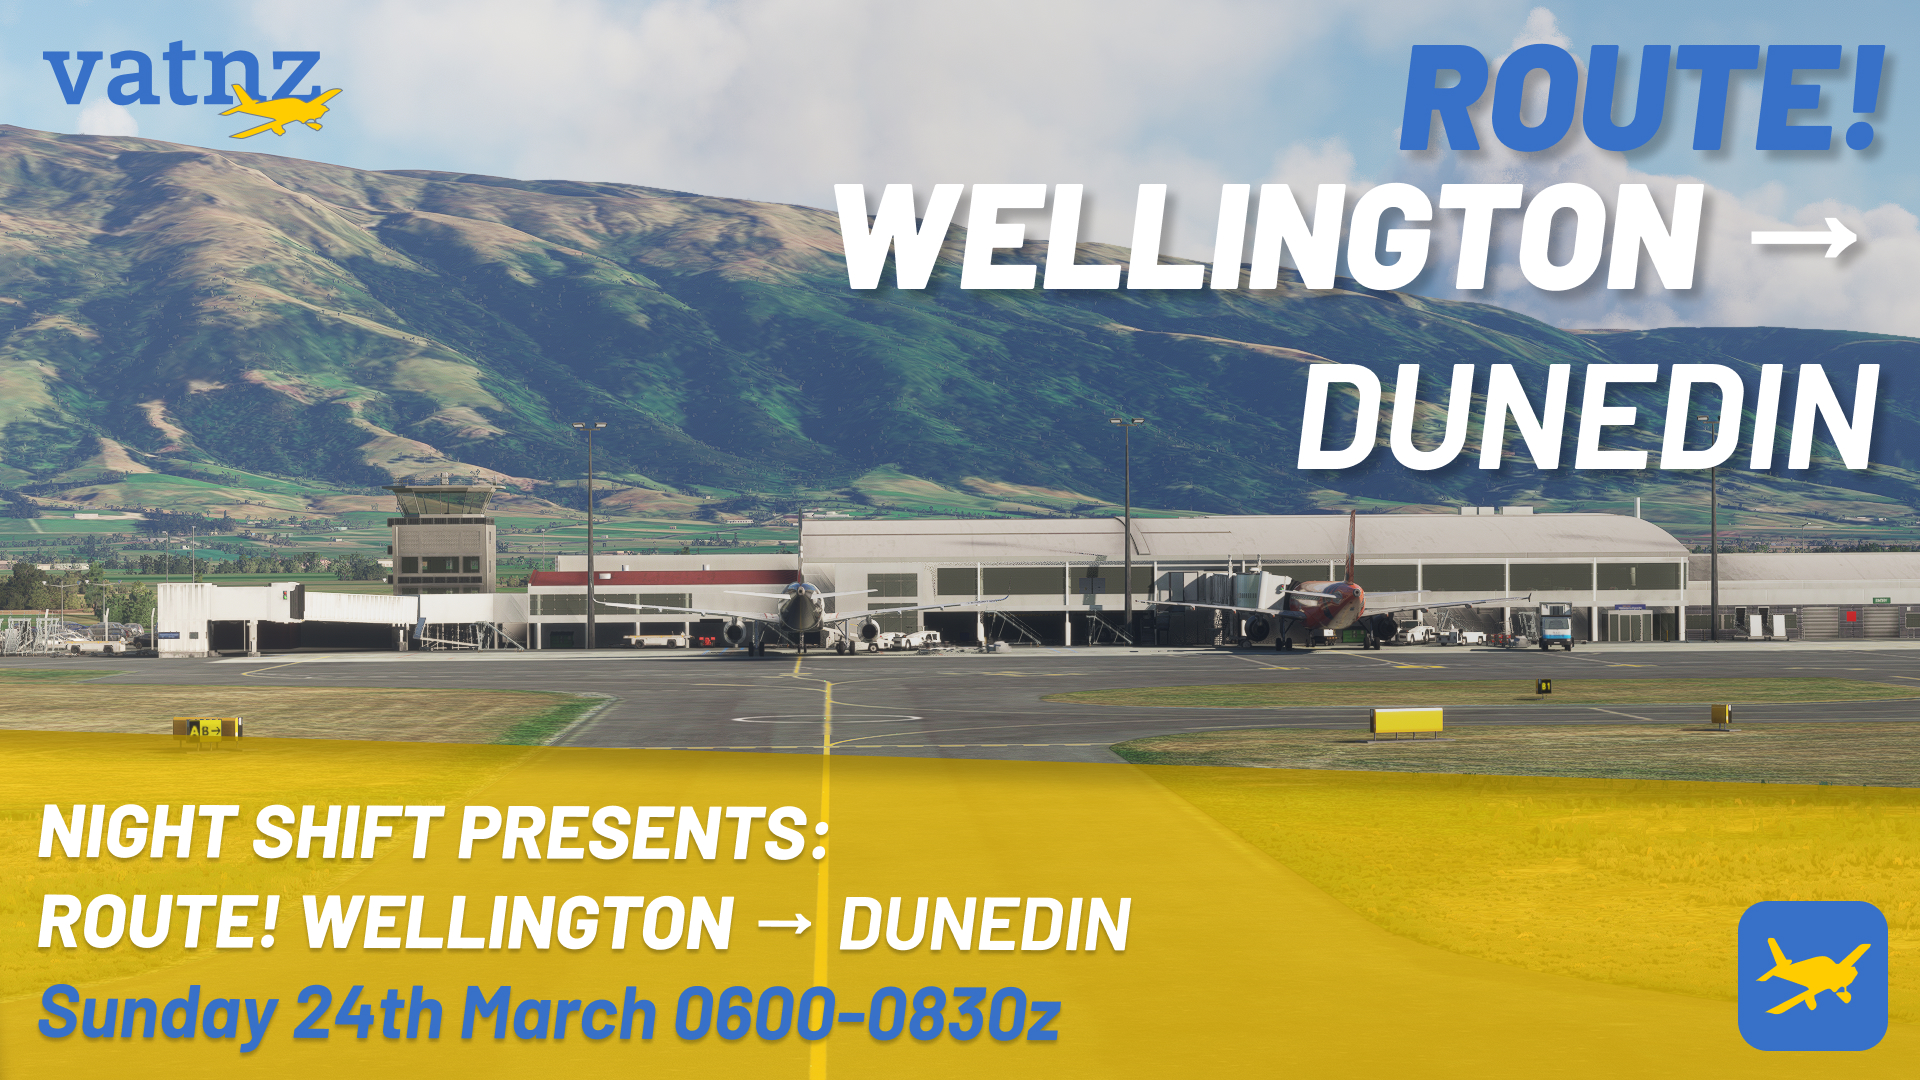 Night Shift Presents: Route! Wellington - Dunedin